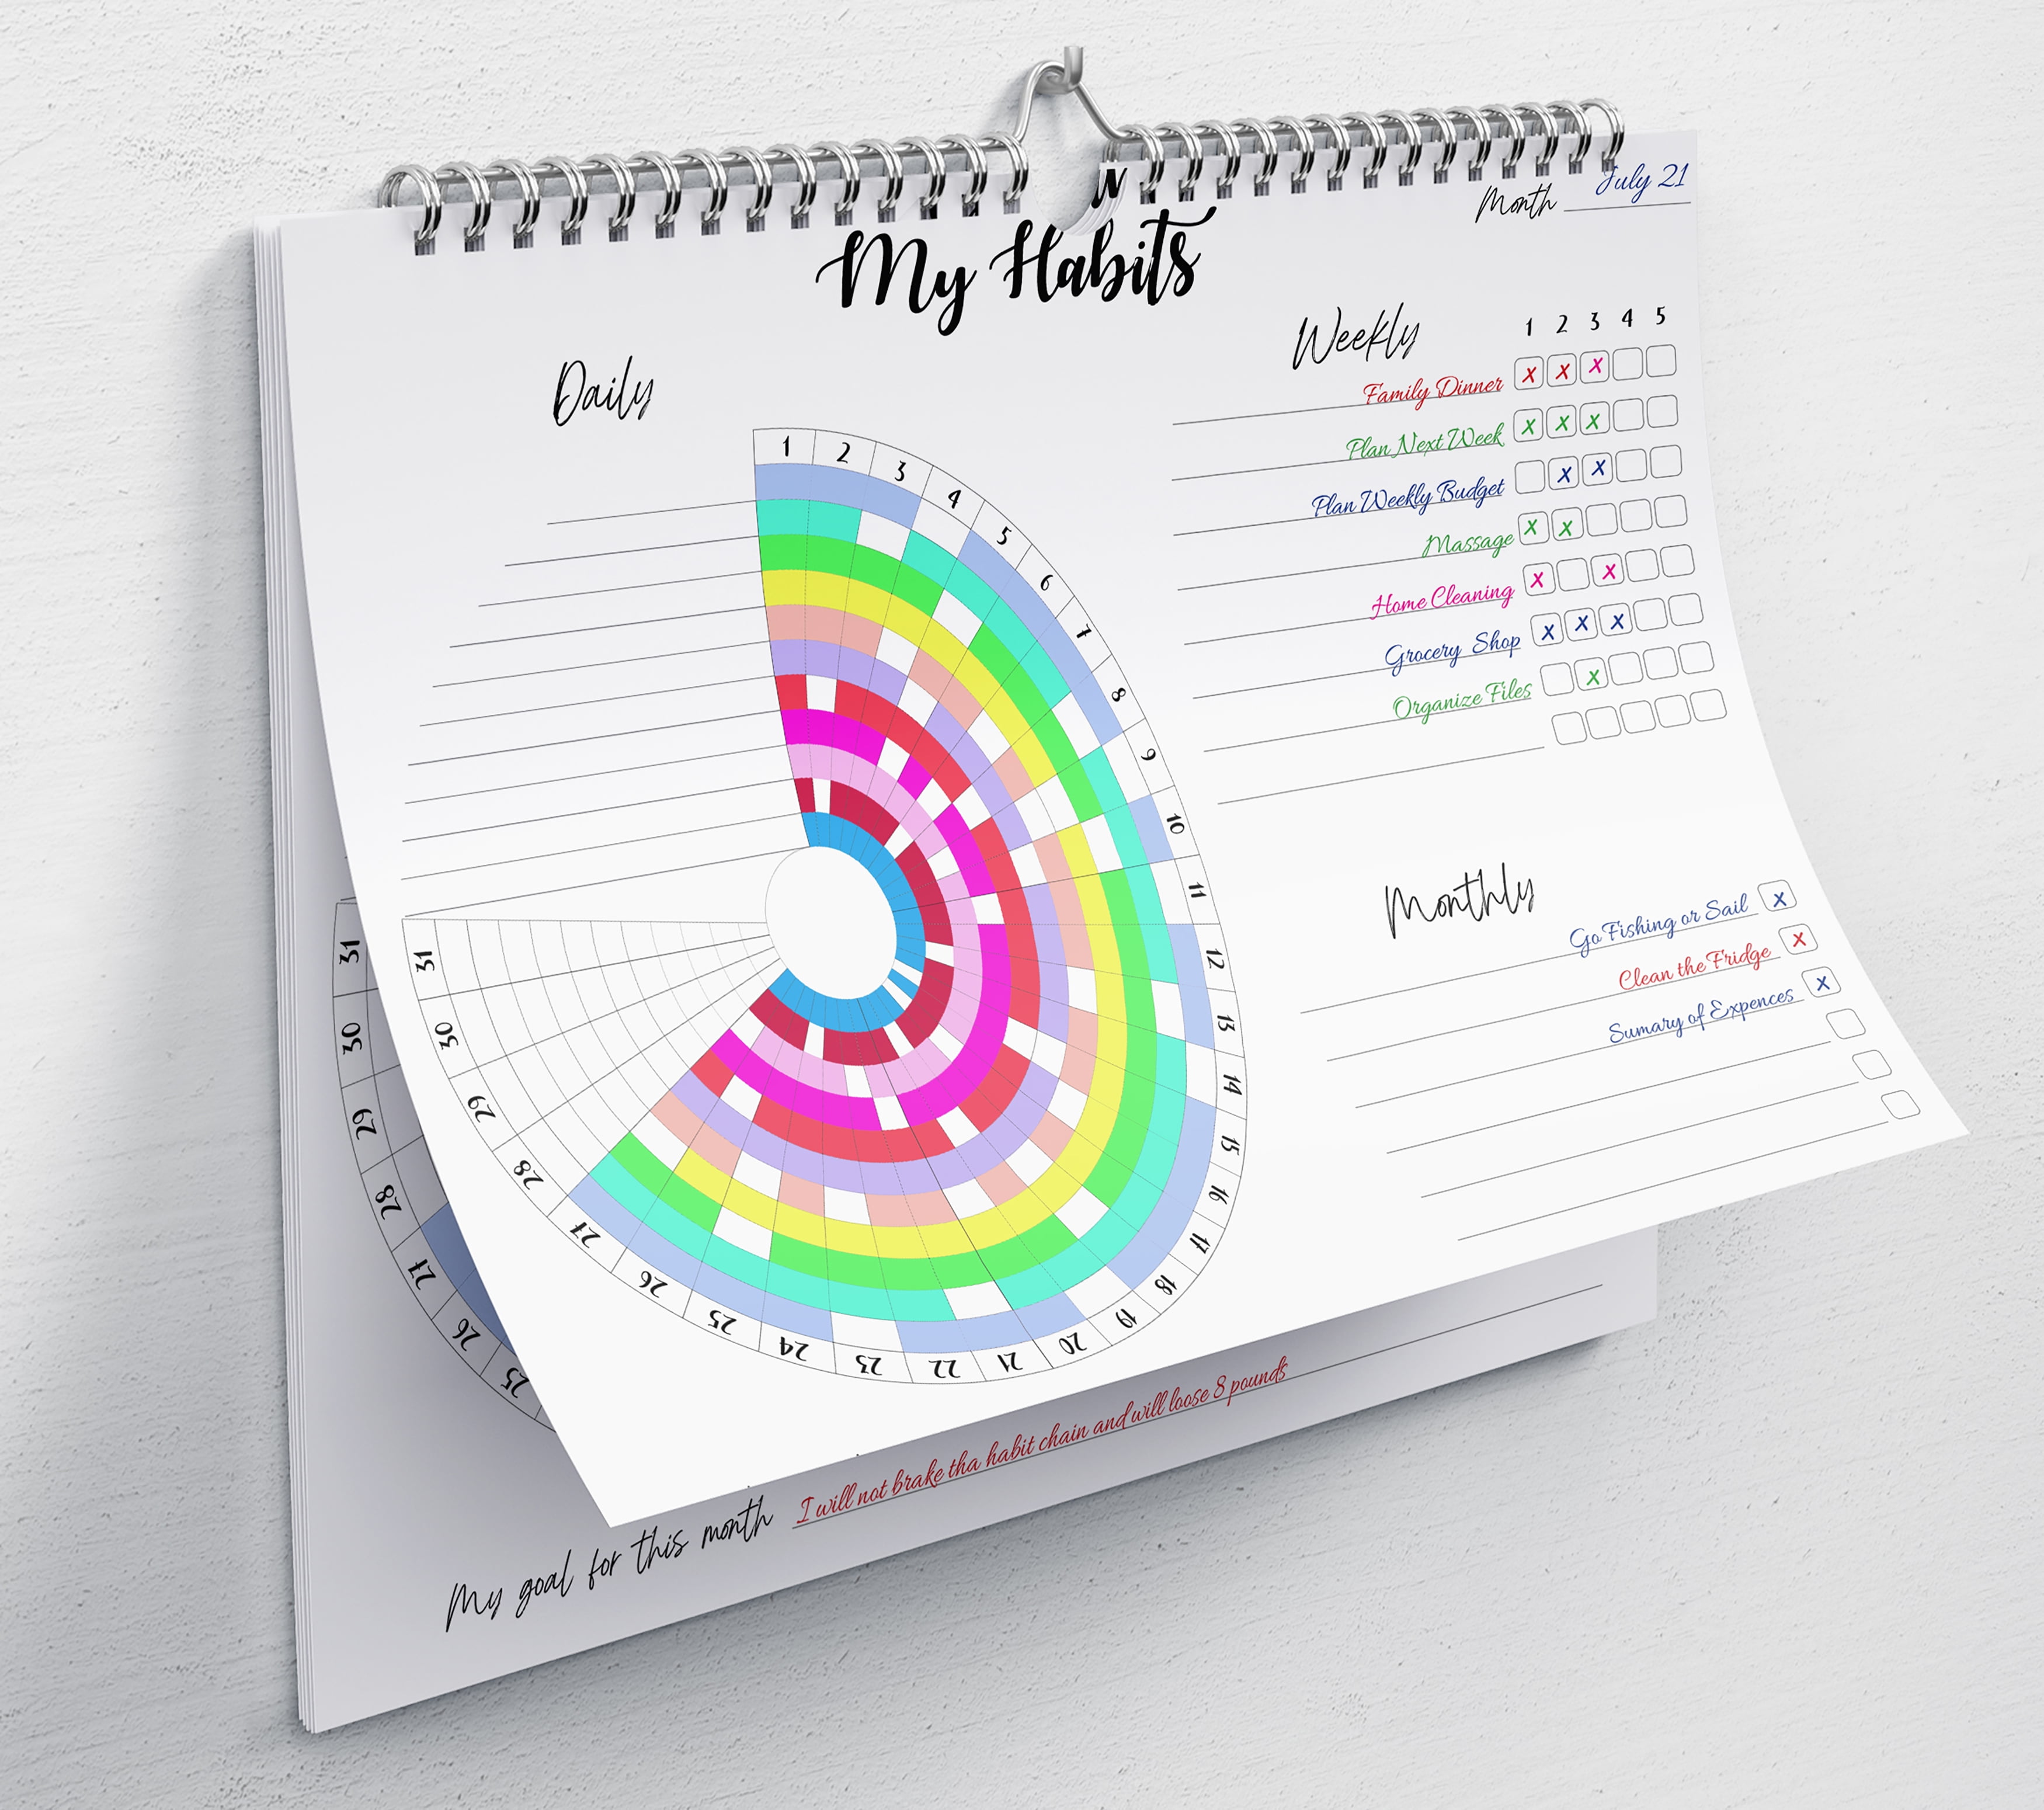 IngenericIn, Habit Tracker Calendar, Monthly, Weekly, Daily Habit Planner Tracker with Motivation Journal